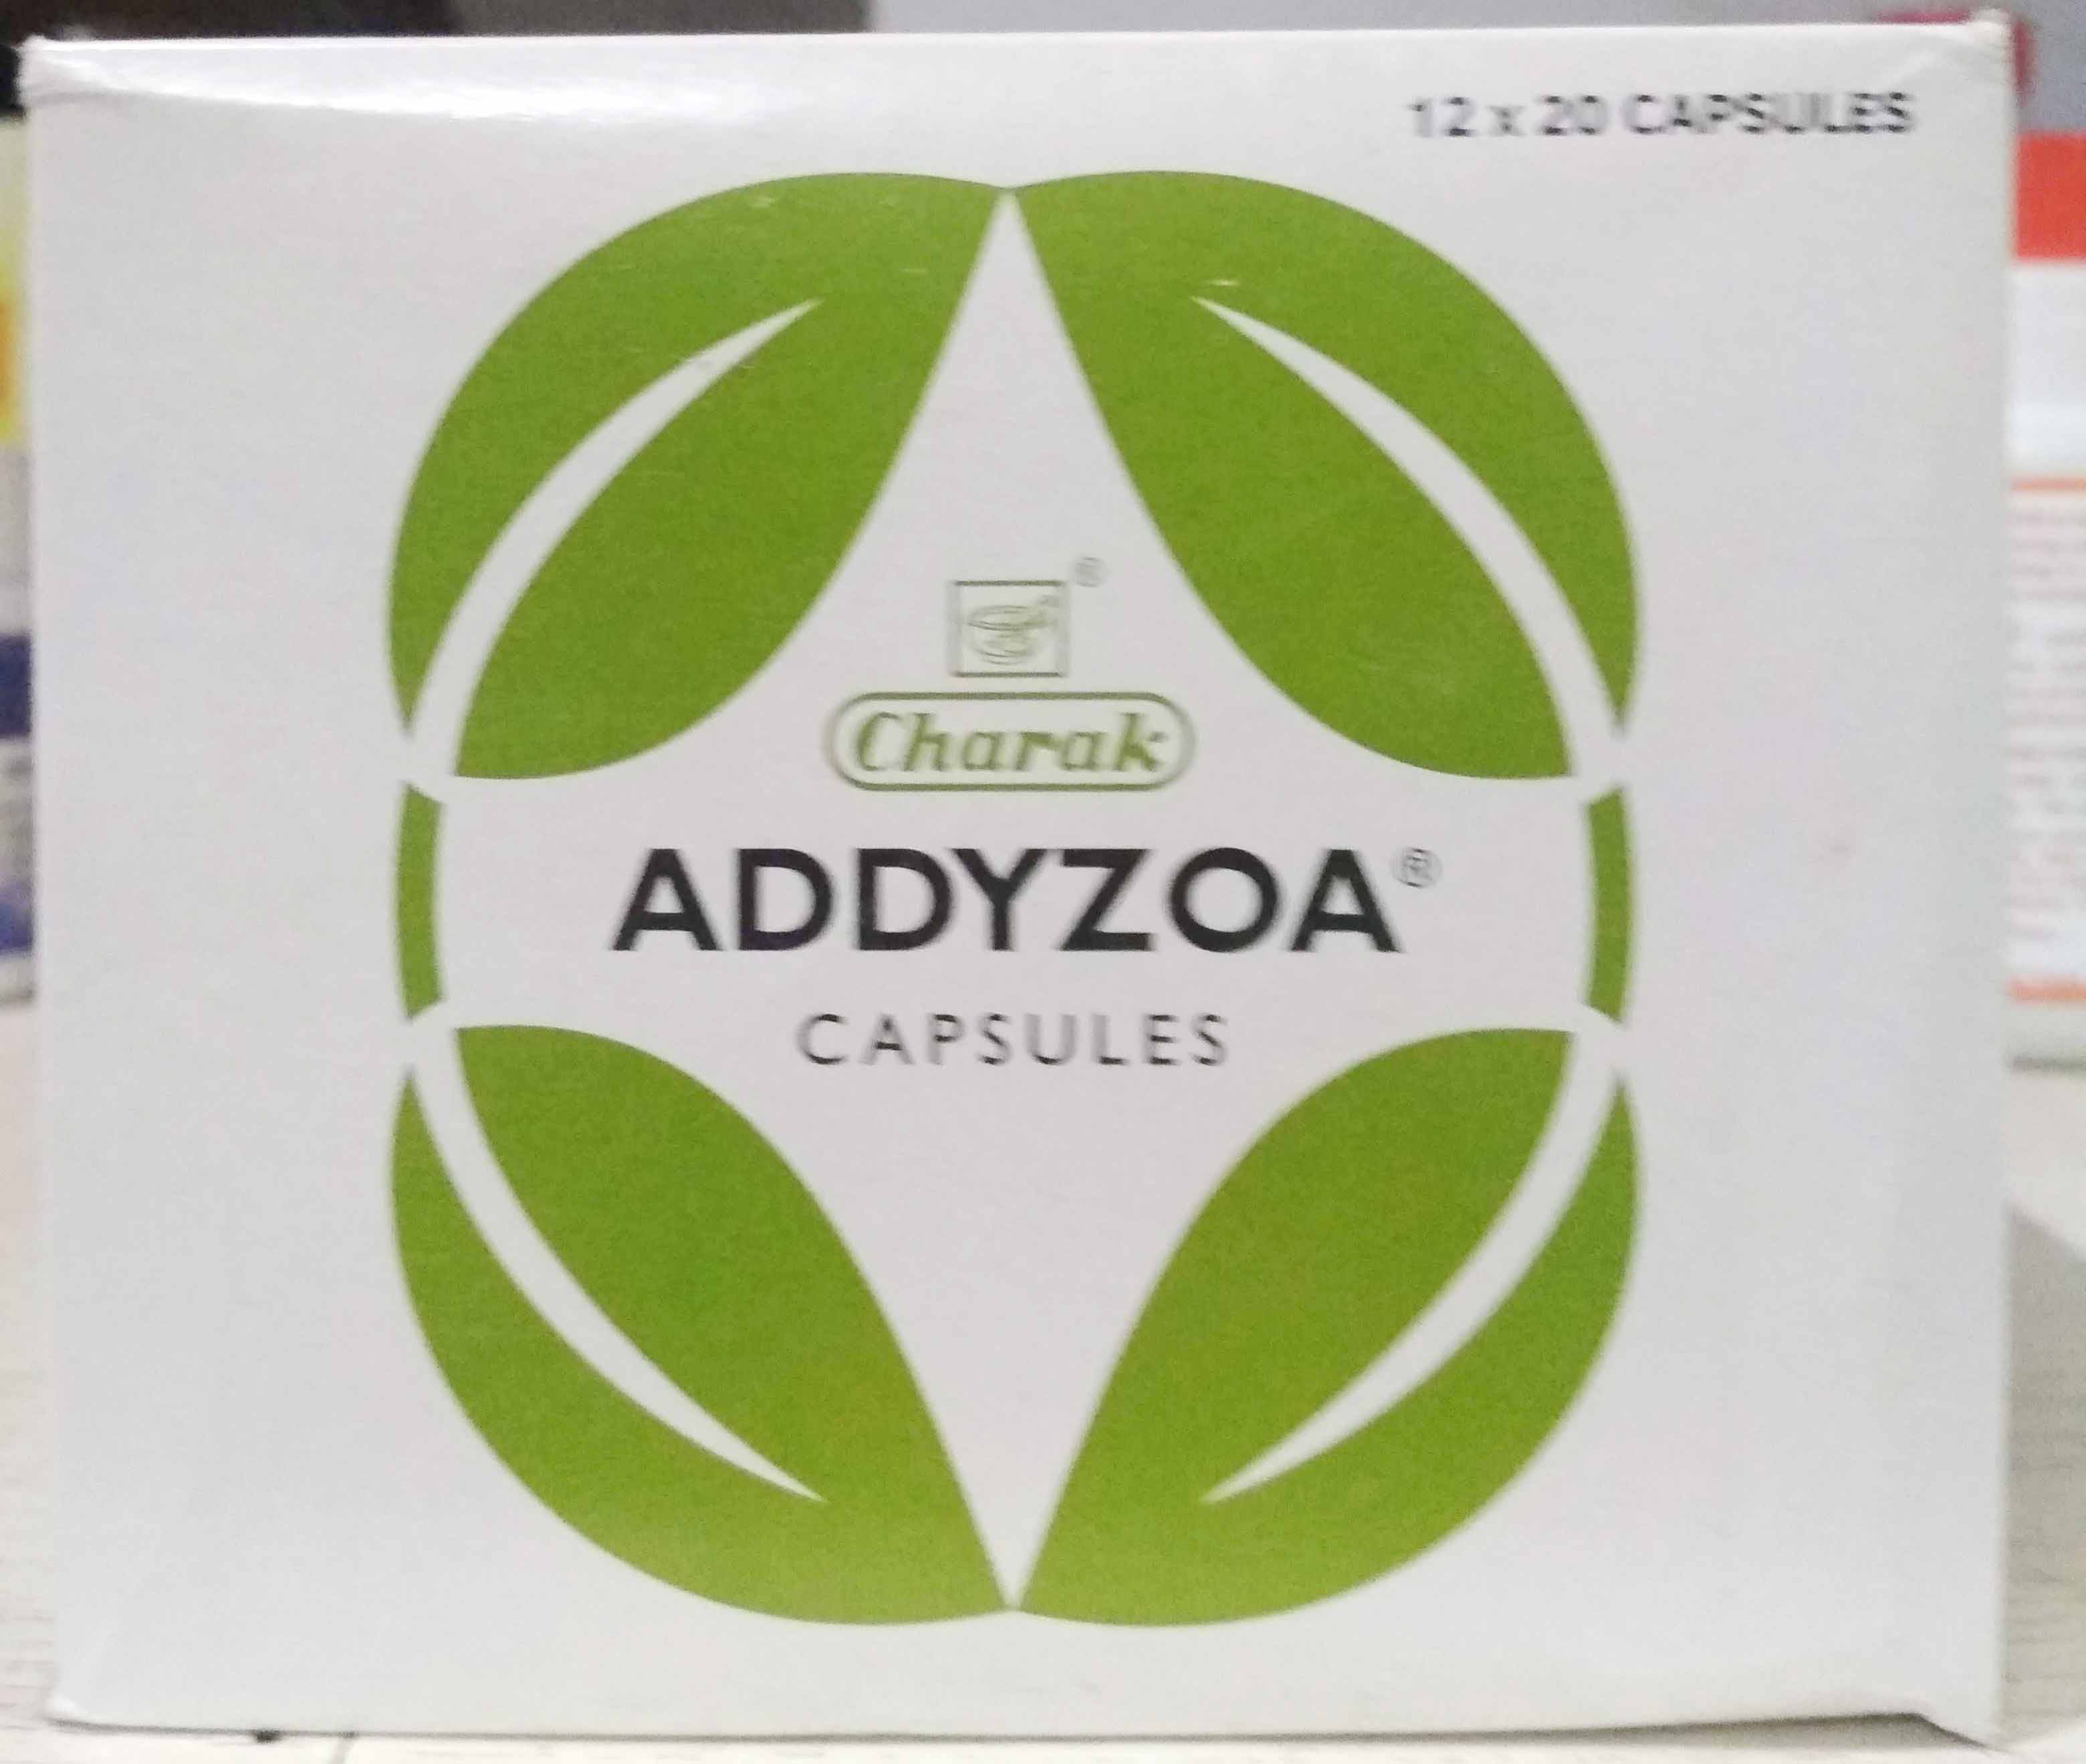 addyzoa capsule 40cap upto 15% off Charak Pharma Mumbai